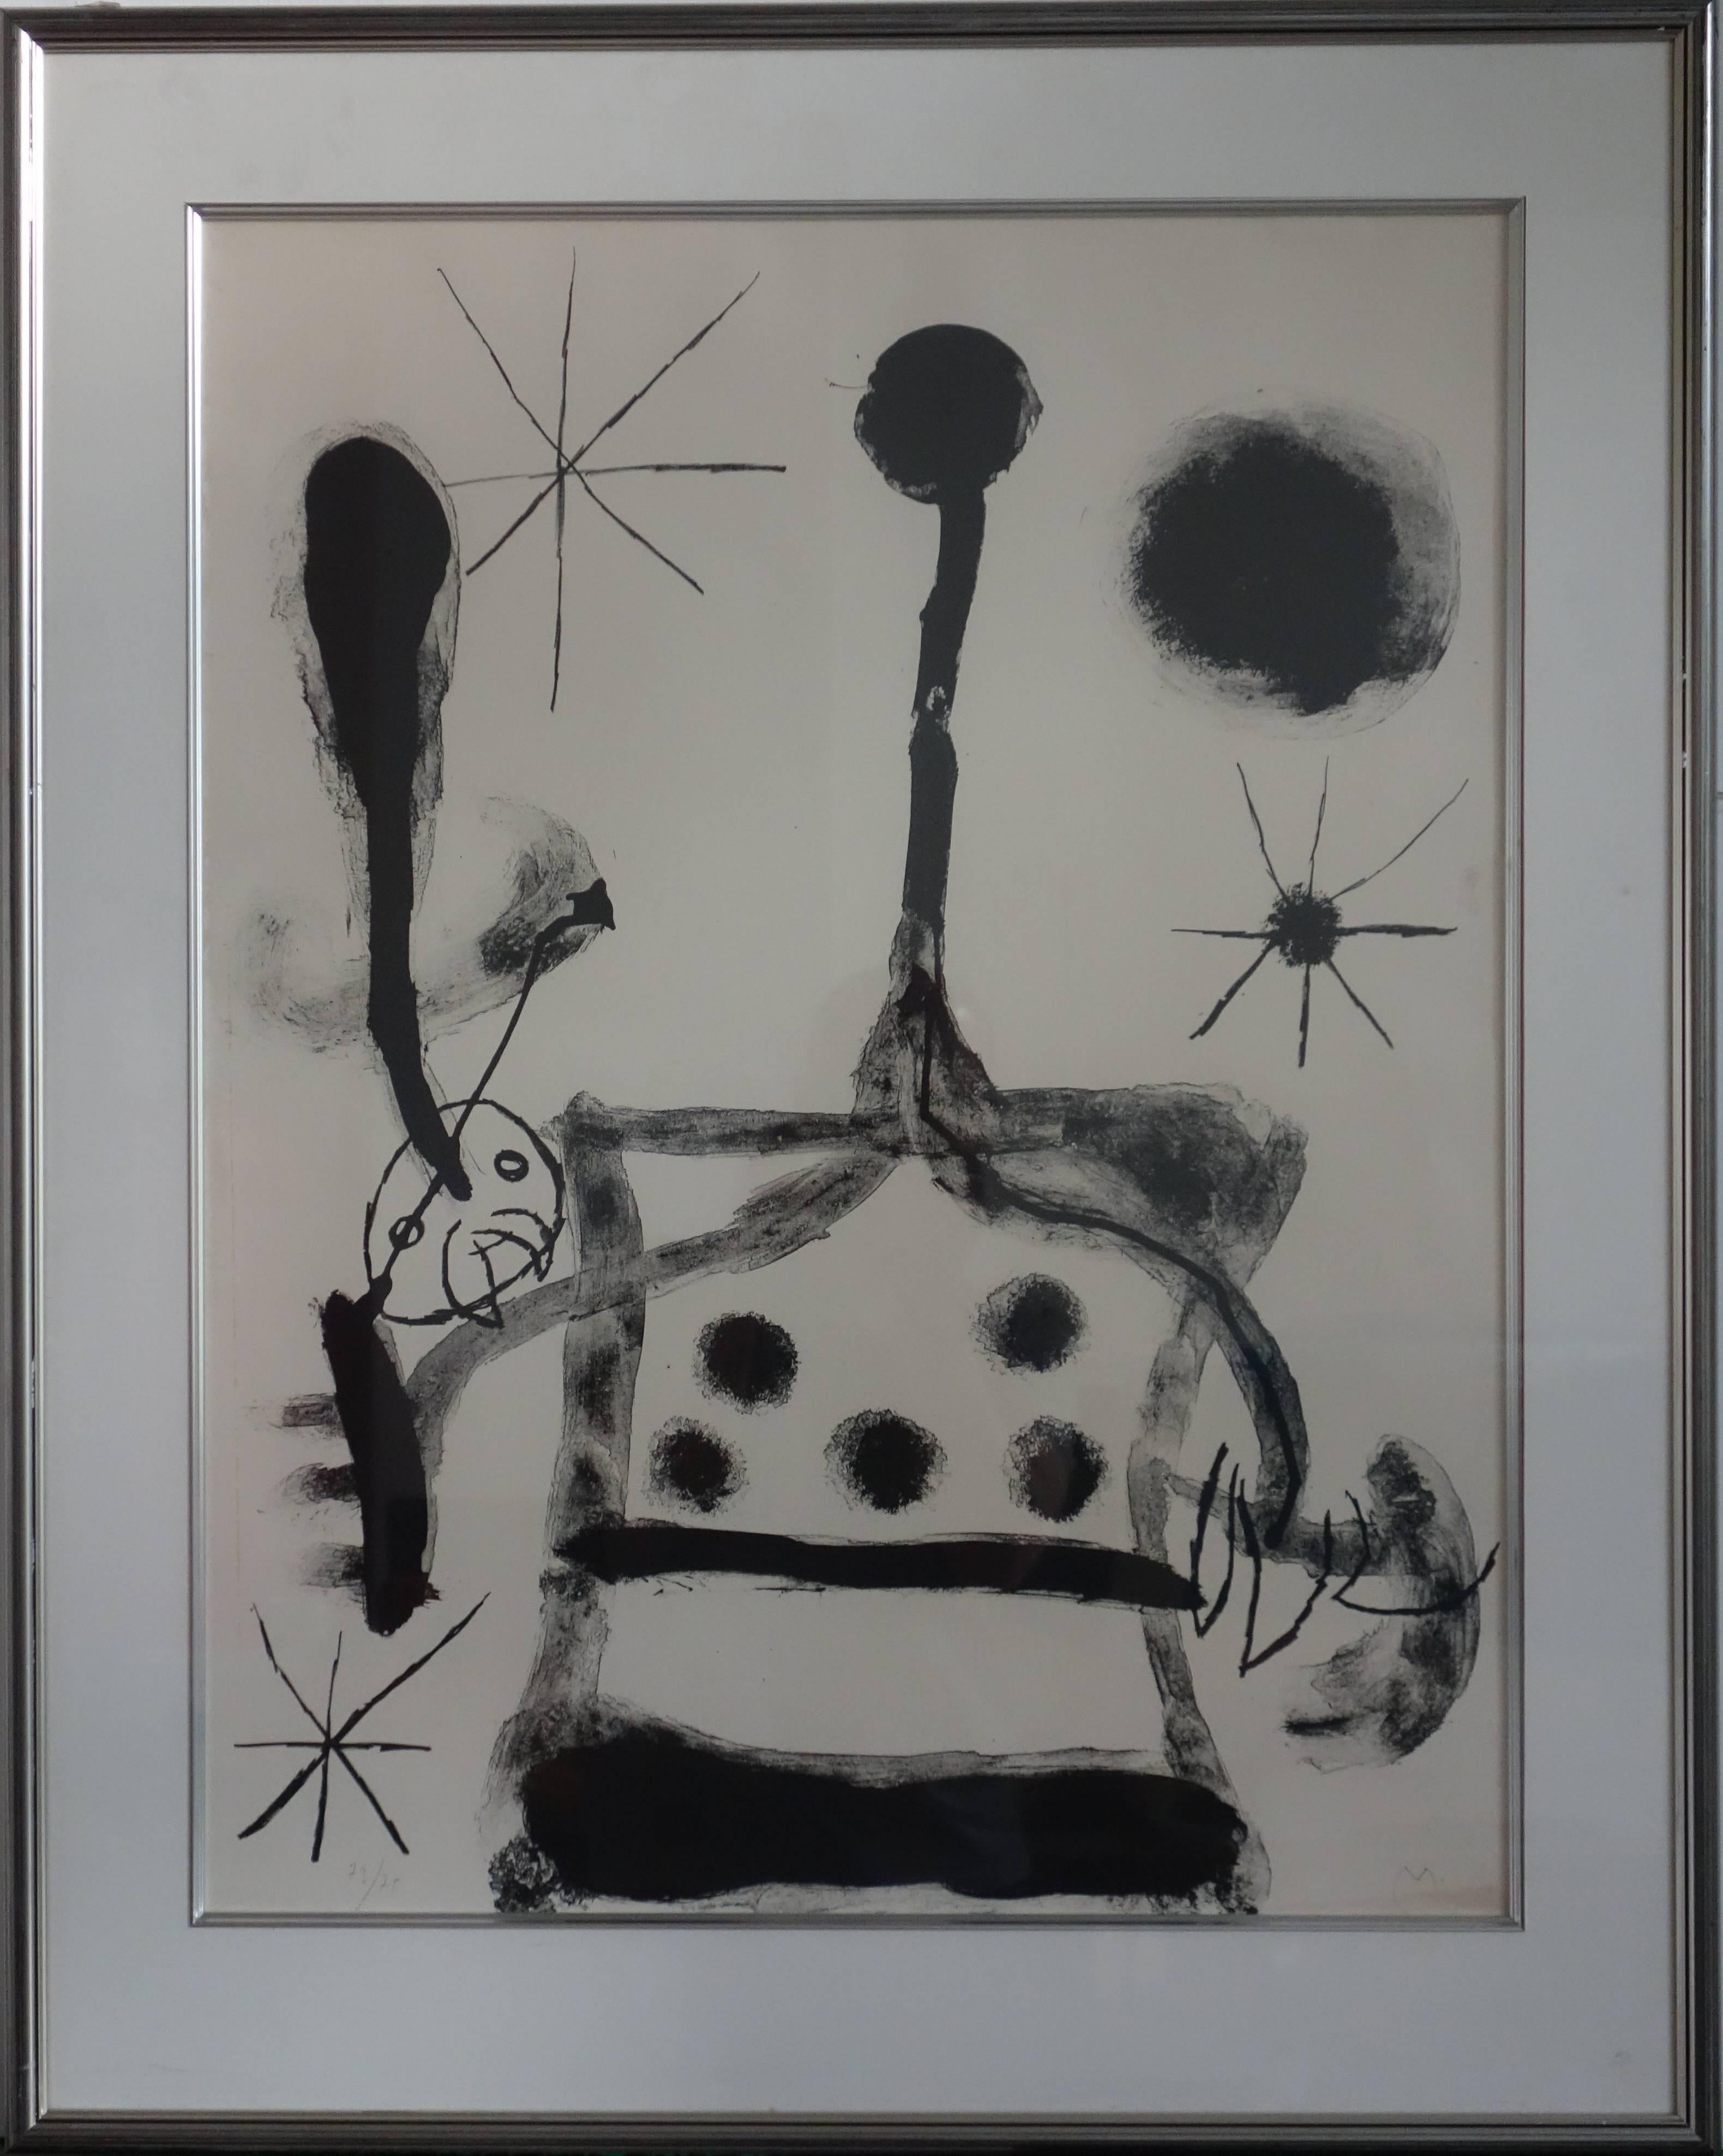 Joan Miró Abstract Print - Album 19 : Plate 4, Man Handling his Head - Original handsigned lithograph